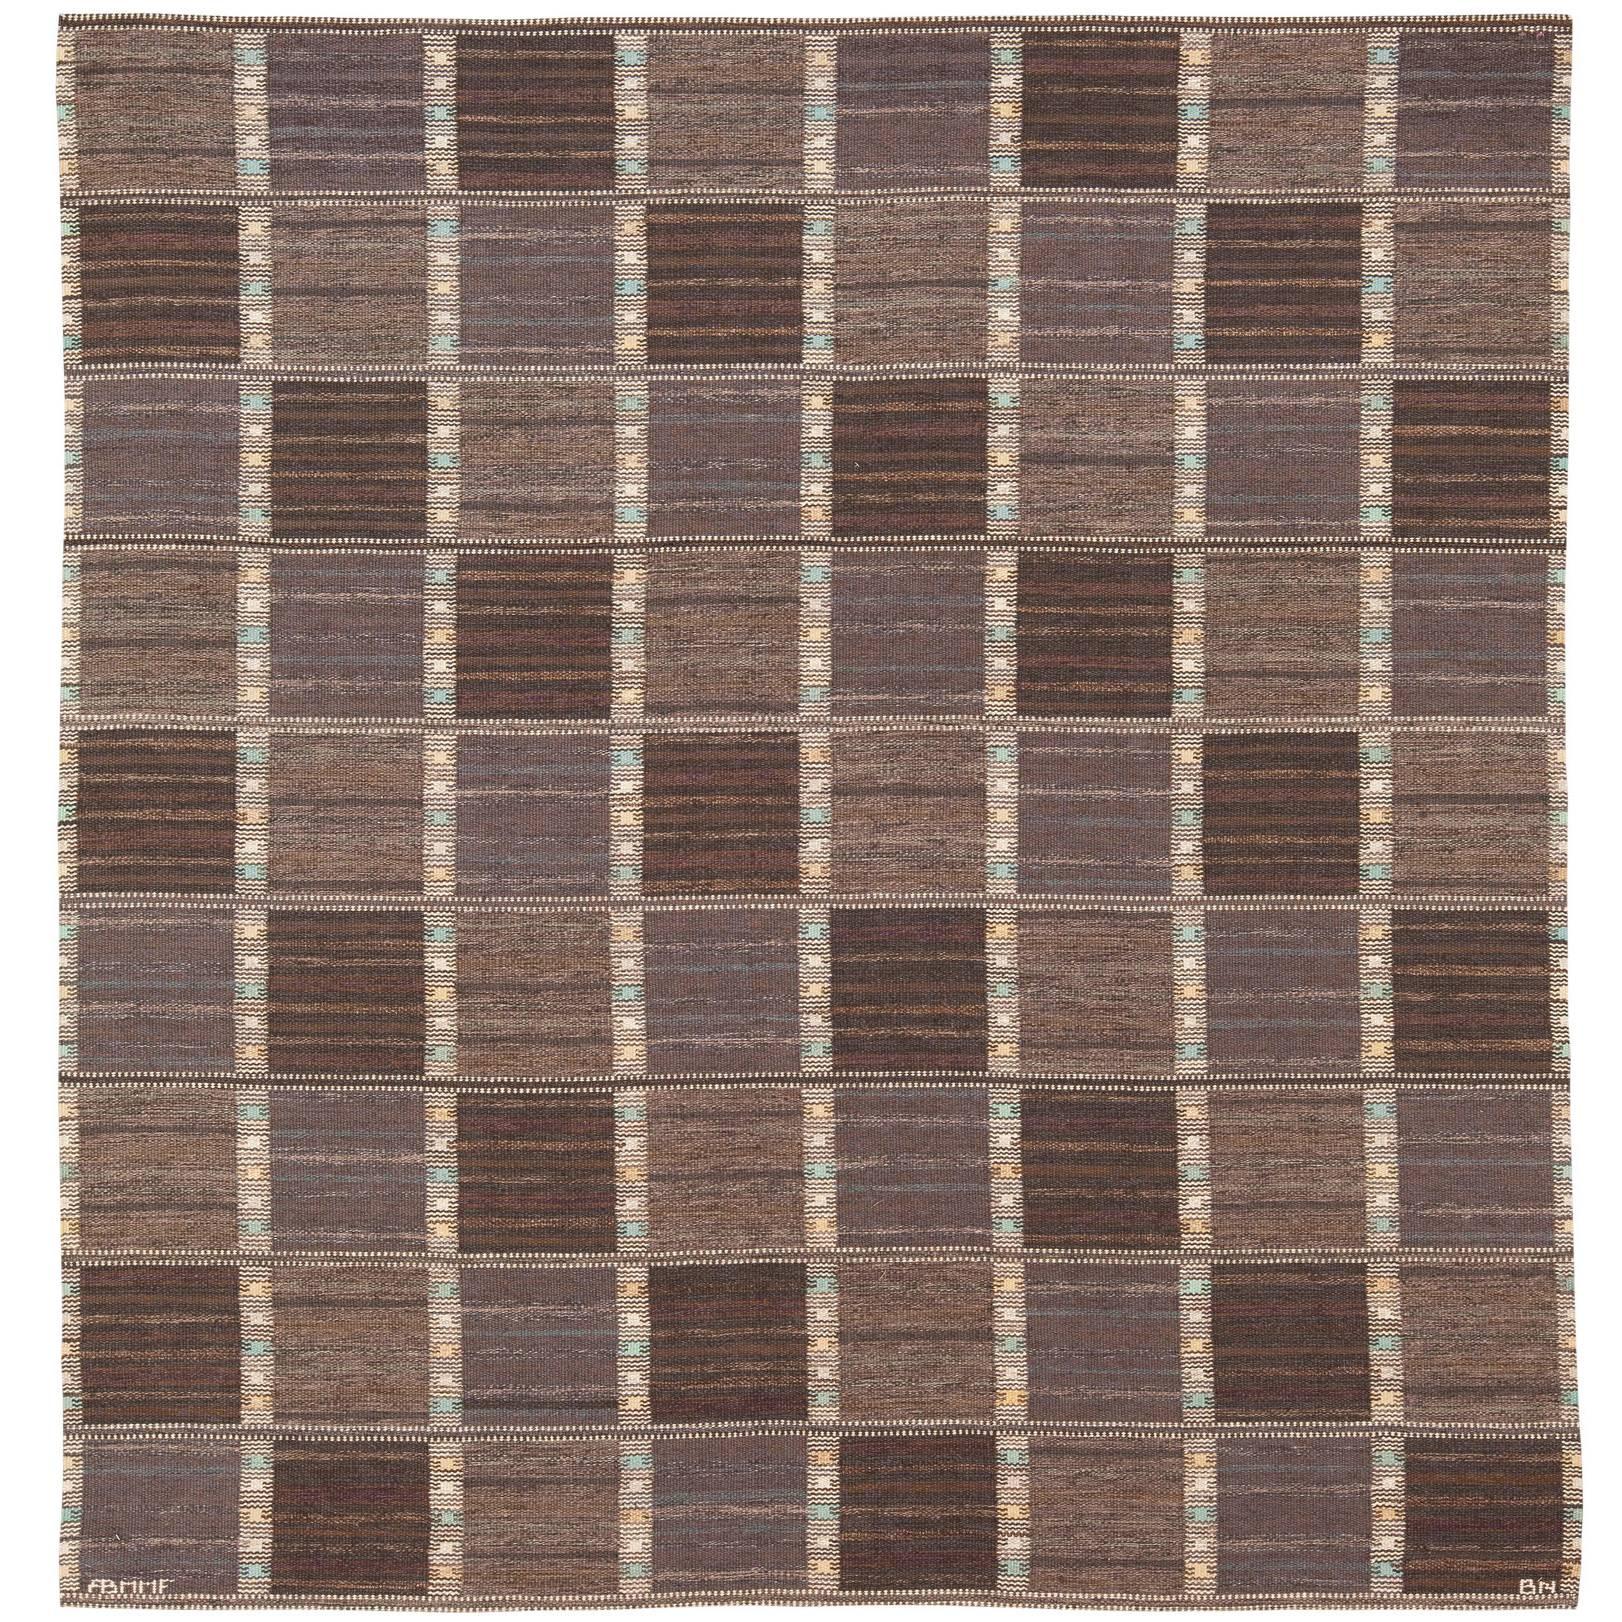 Mid-20th Century Swedish Flat Weave Carpet, "FALURUTAN, MÖRK" For Sale